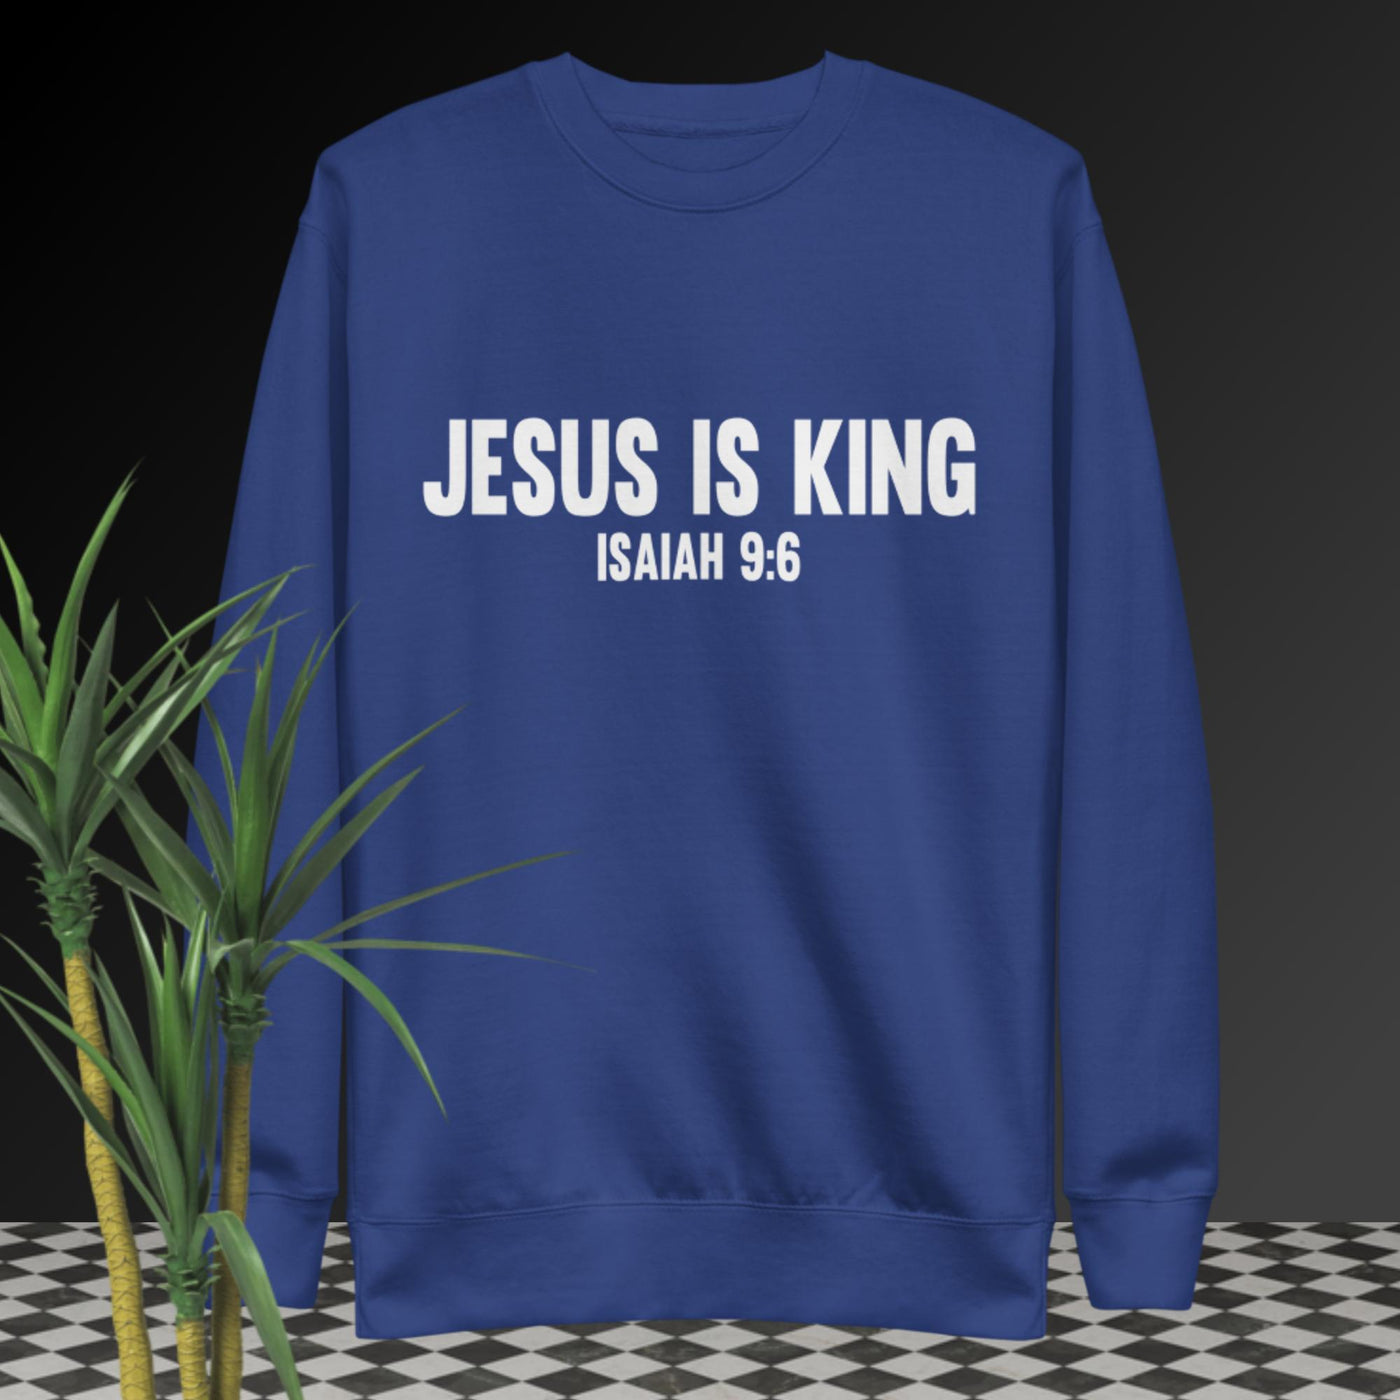 Jesus Is King Womens Premium Sweatshirt